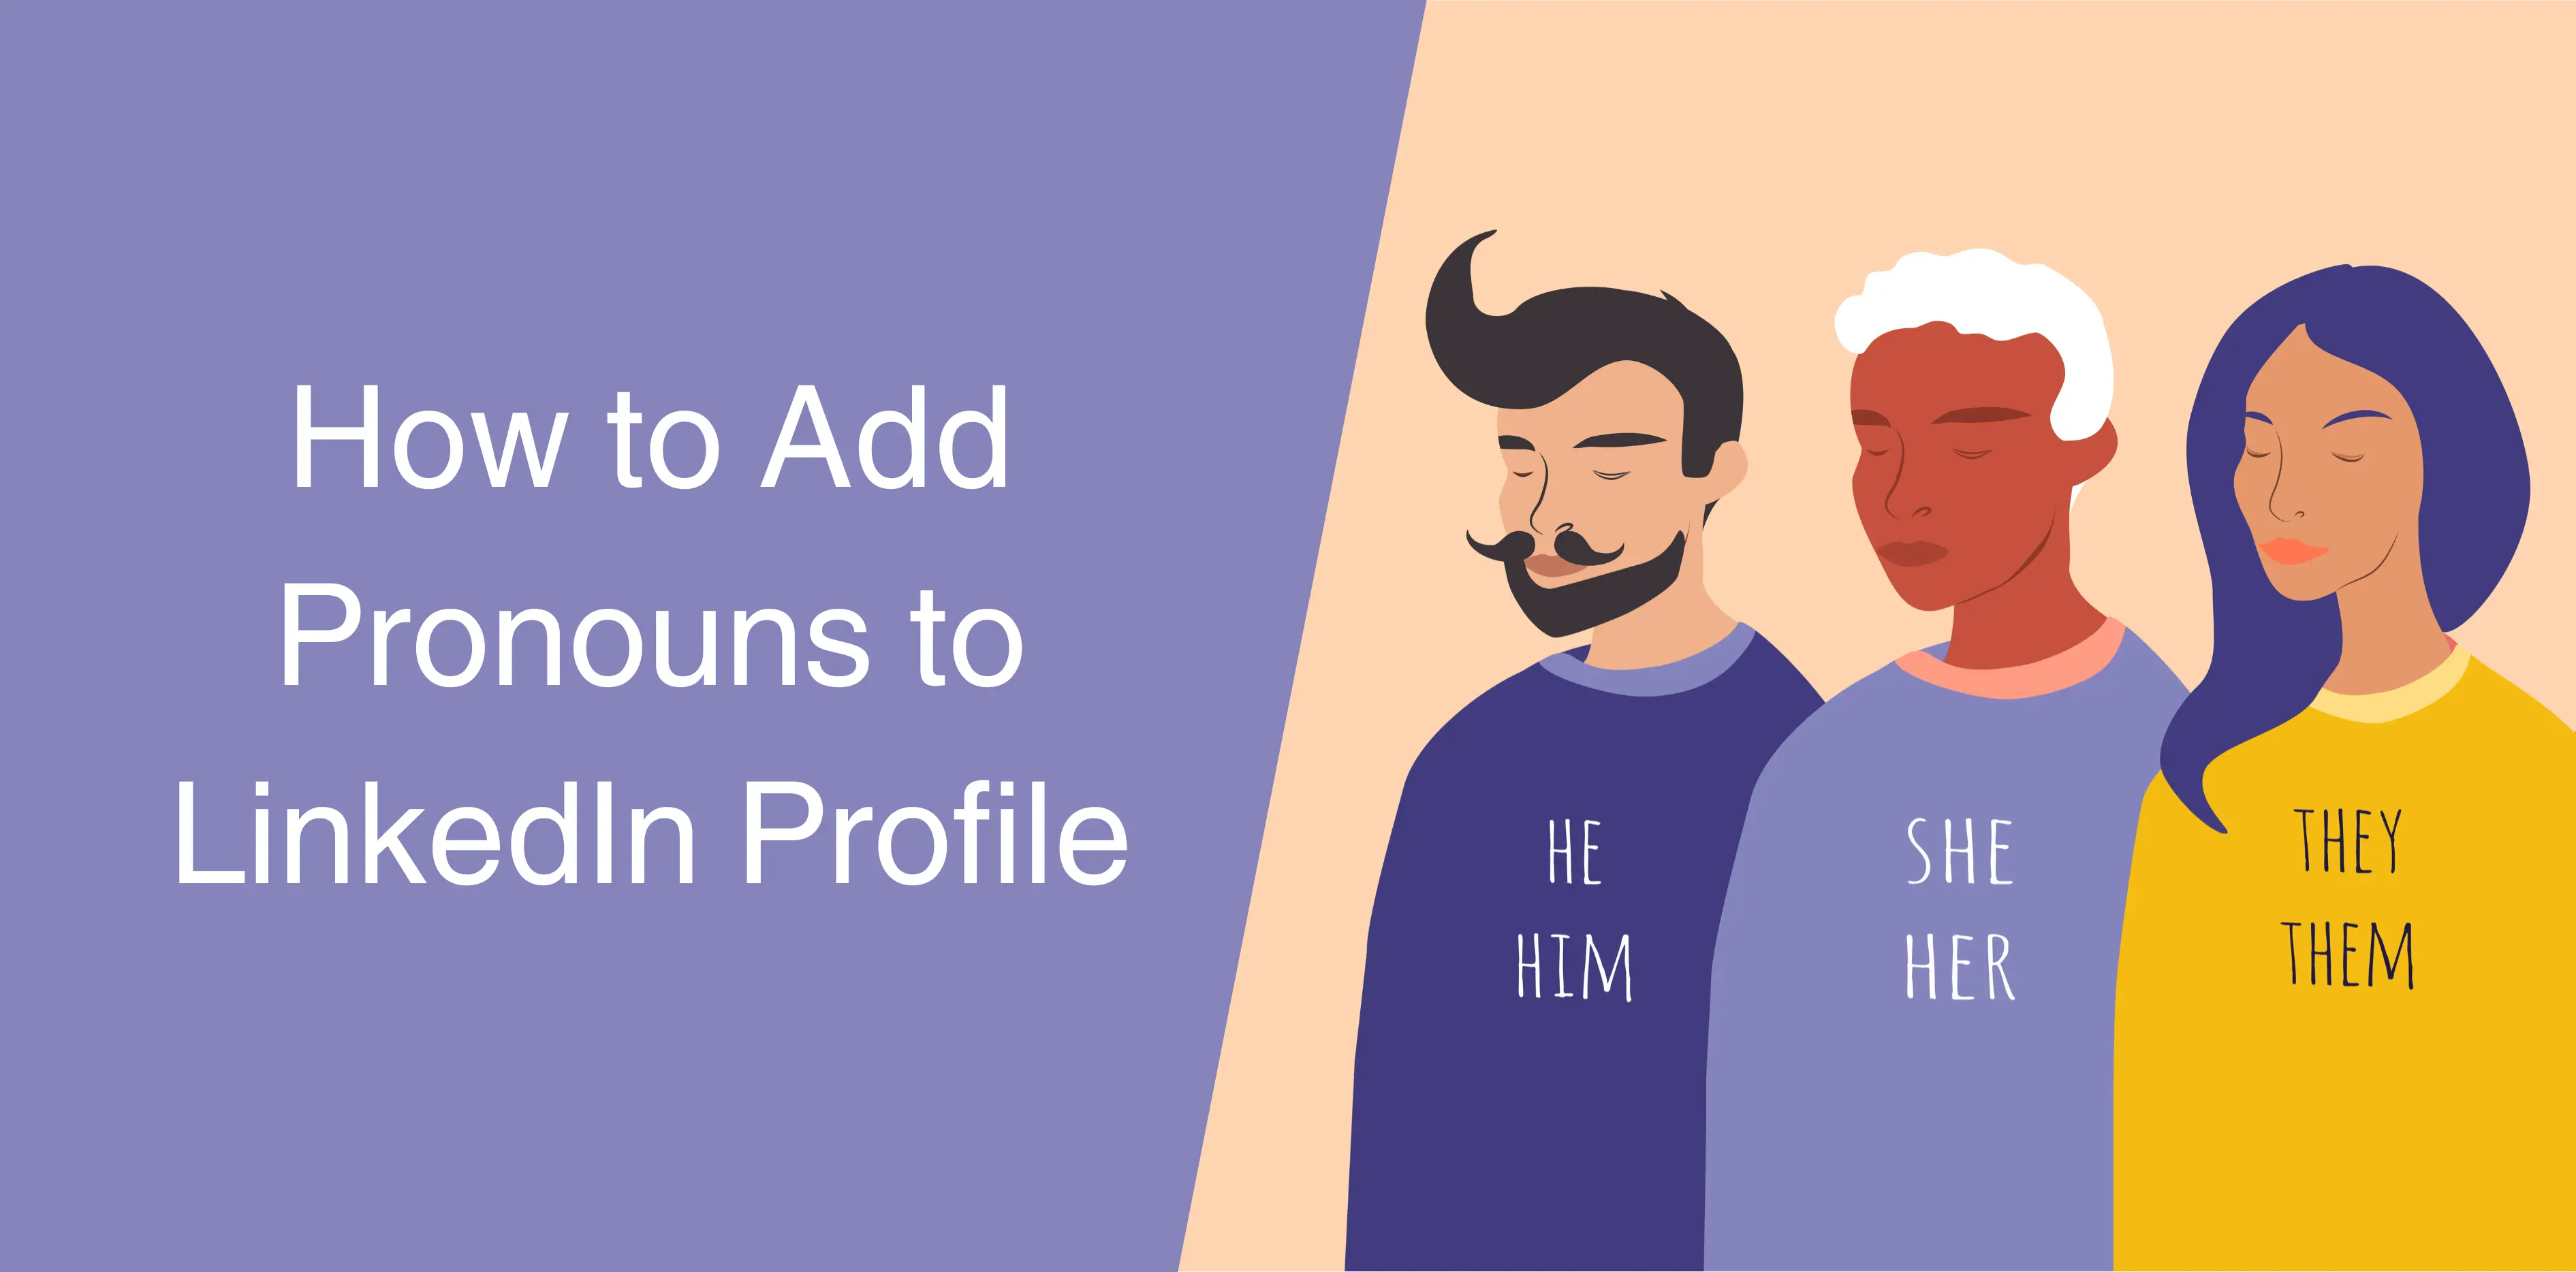 How to Add Pronouns to LinkedIn Profile